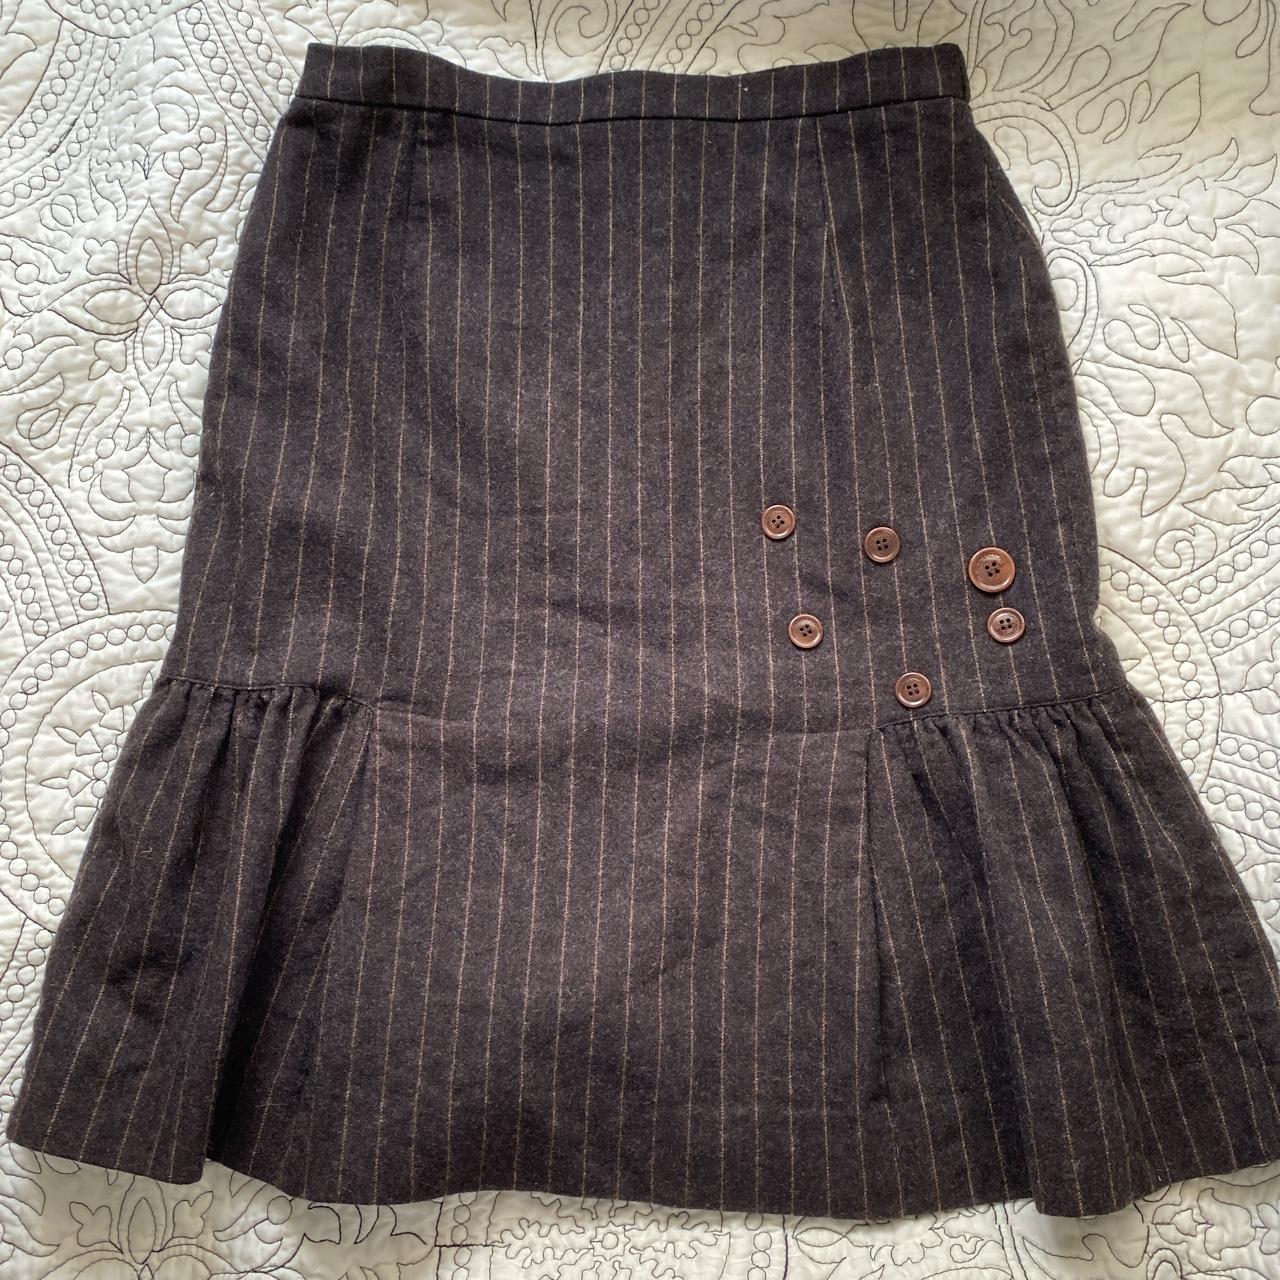 Moschino Cheap & Chic Women's Brown and Tan Skirt (5)